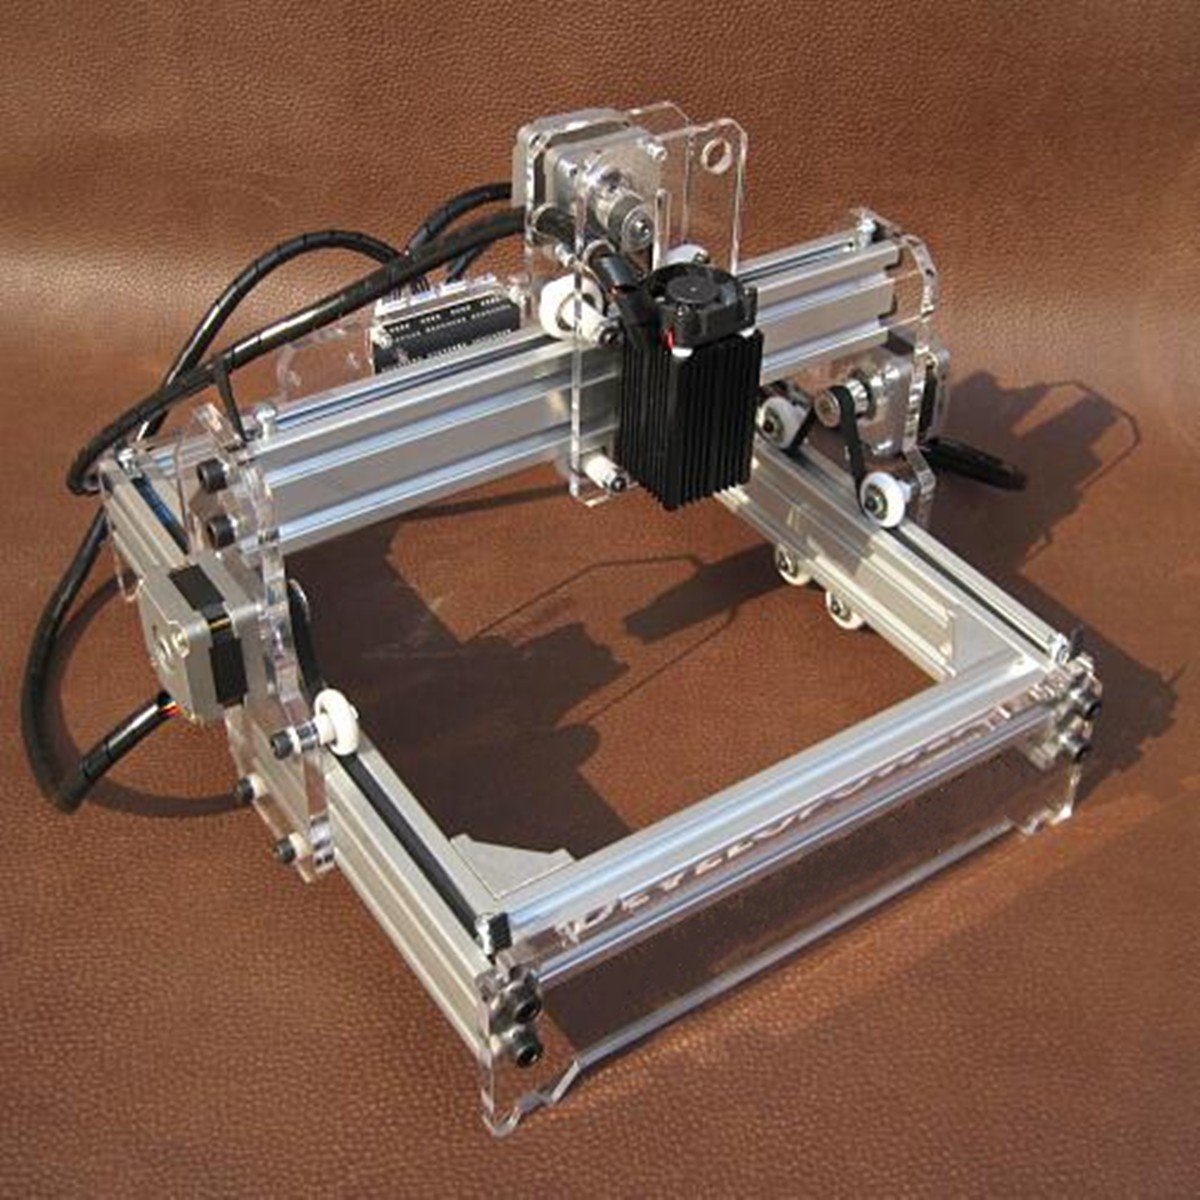 

31x26x23cm 12V 500mW Desktop DIY Laser Engraver Engraving Machine Picture CNC Printer